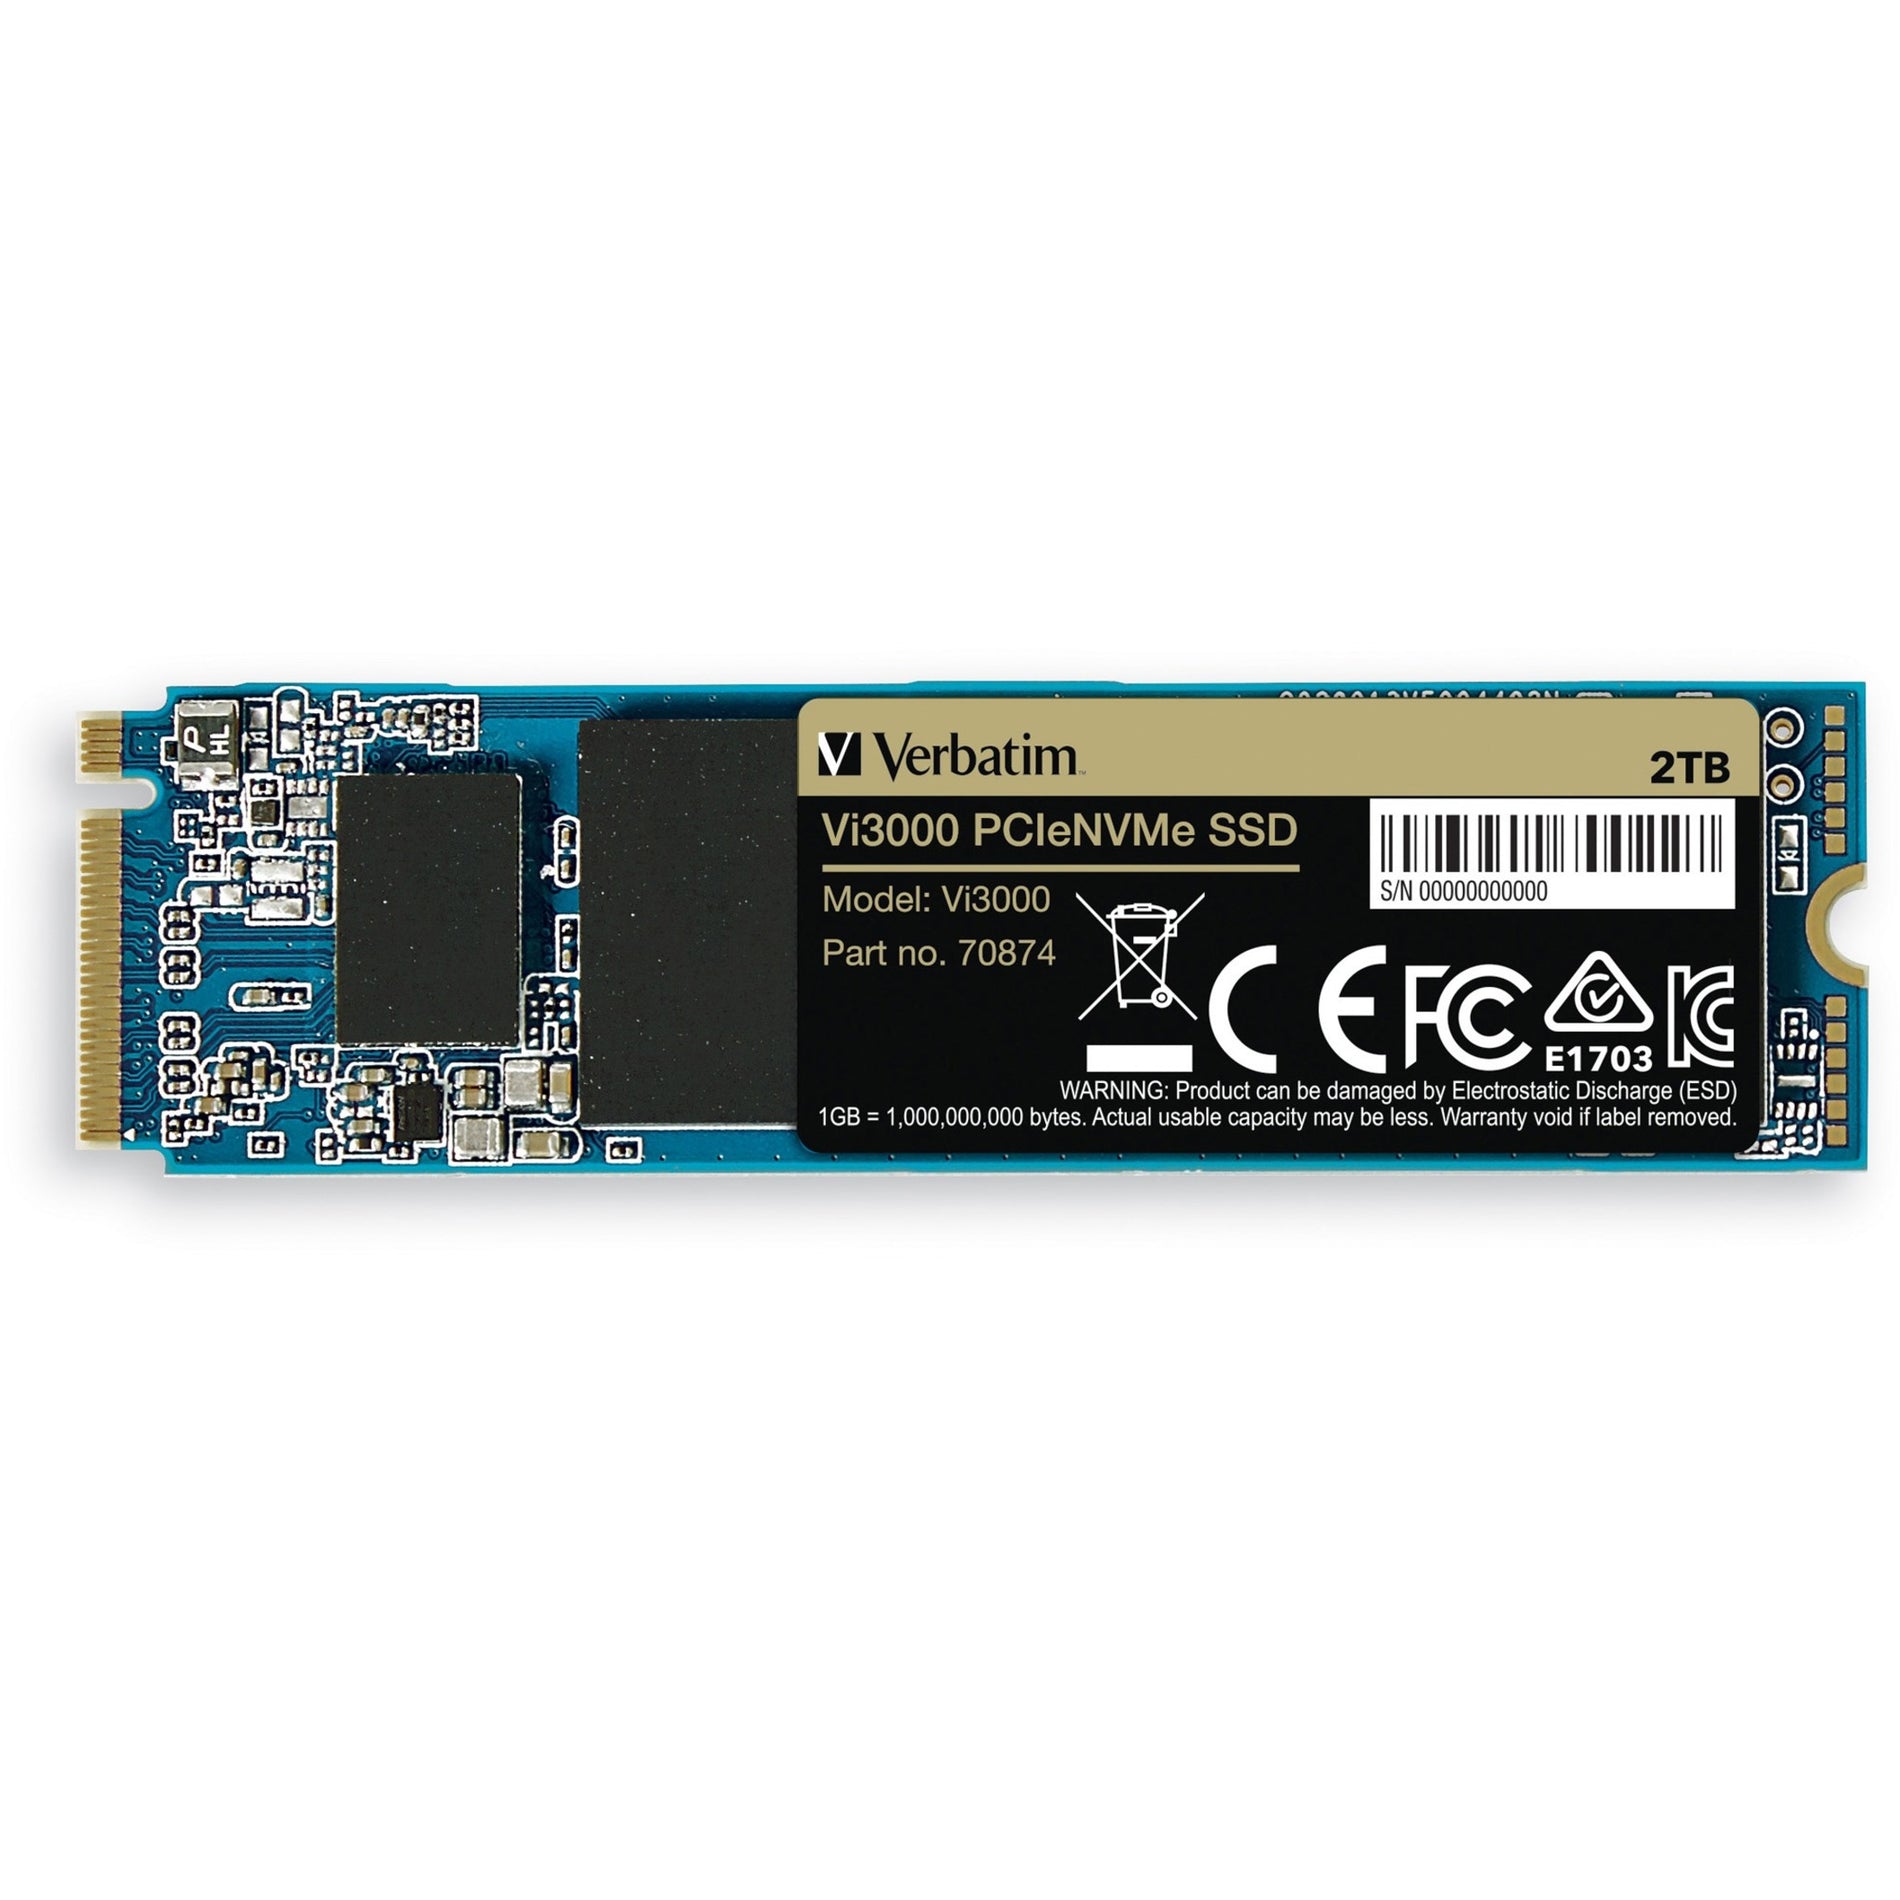 Verbatim 70874 2TB Vi3000 PCIe NVMe M.2 2280 Internal SSD, 5 Year Warranty, 1200 TB Endurance, 3000 MB/s Read Speed